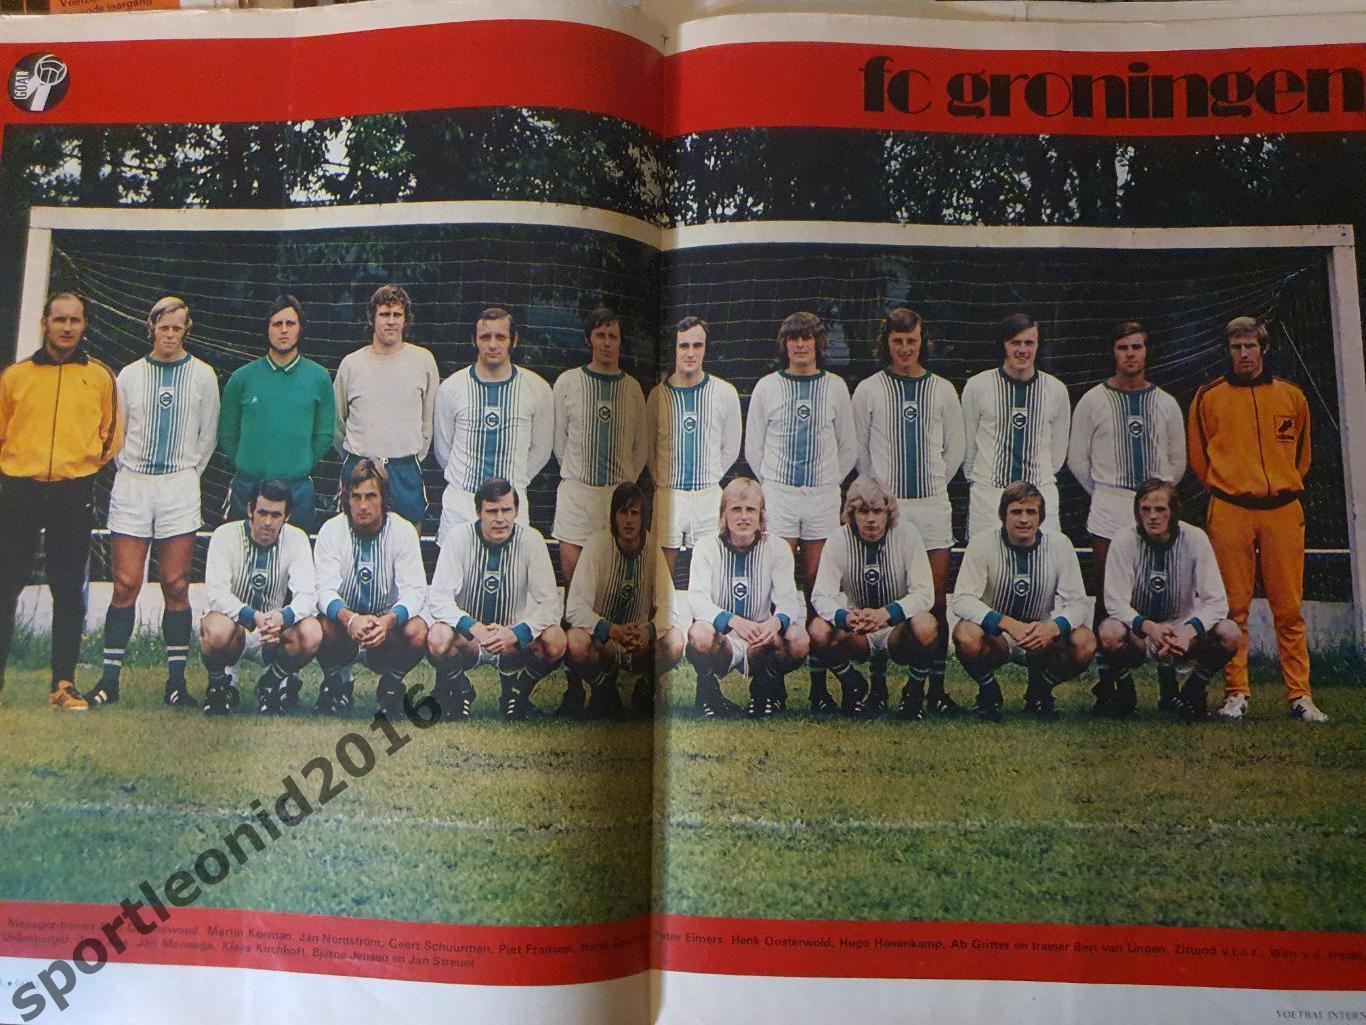 Voetbal International 1972.20 топ выпусков .2 2